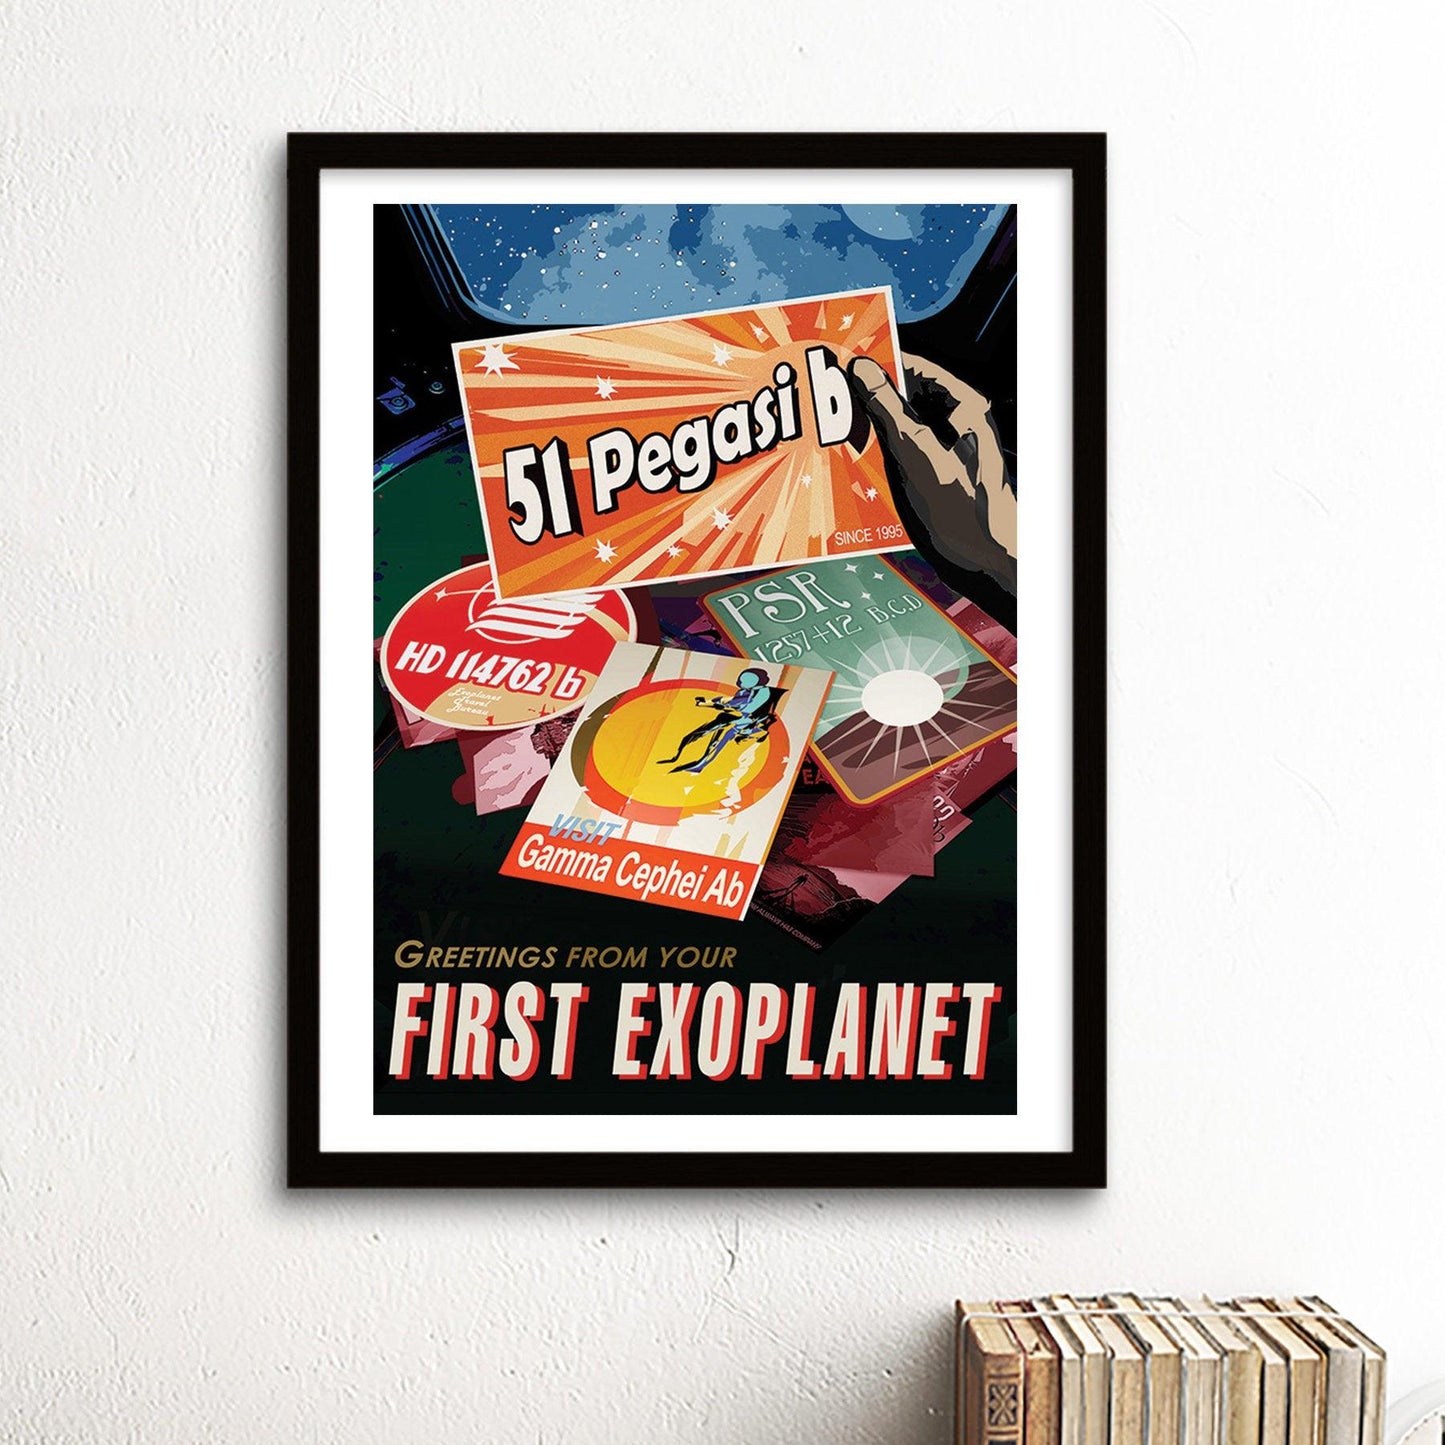 51 Pegasi b - NASA Space Travel Poster - Classic Posters